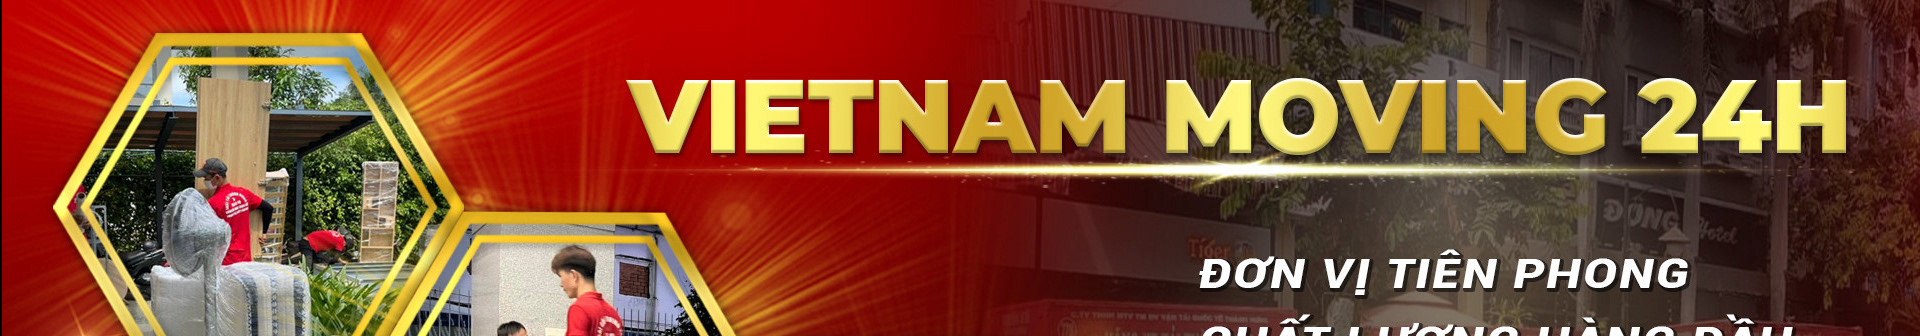 Việt Nam Moving 24H's profile banner